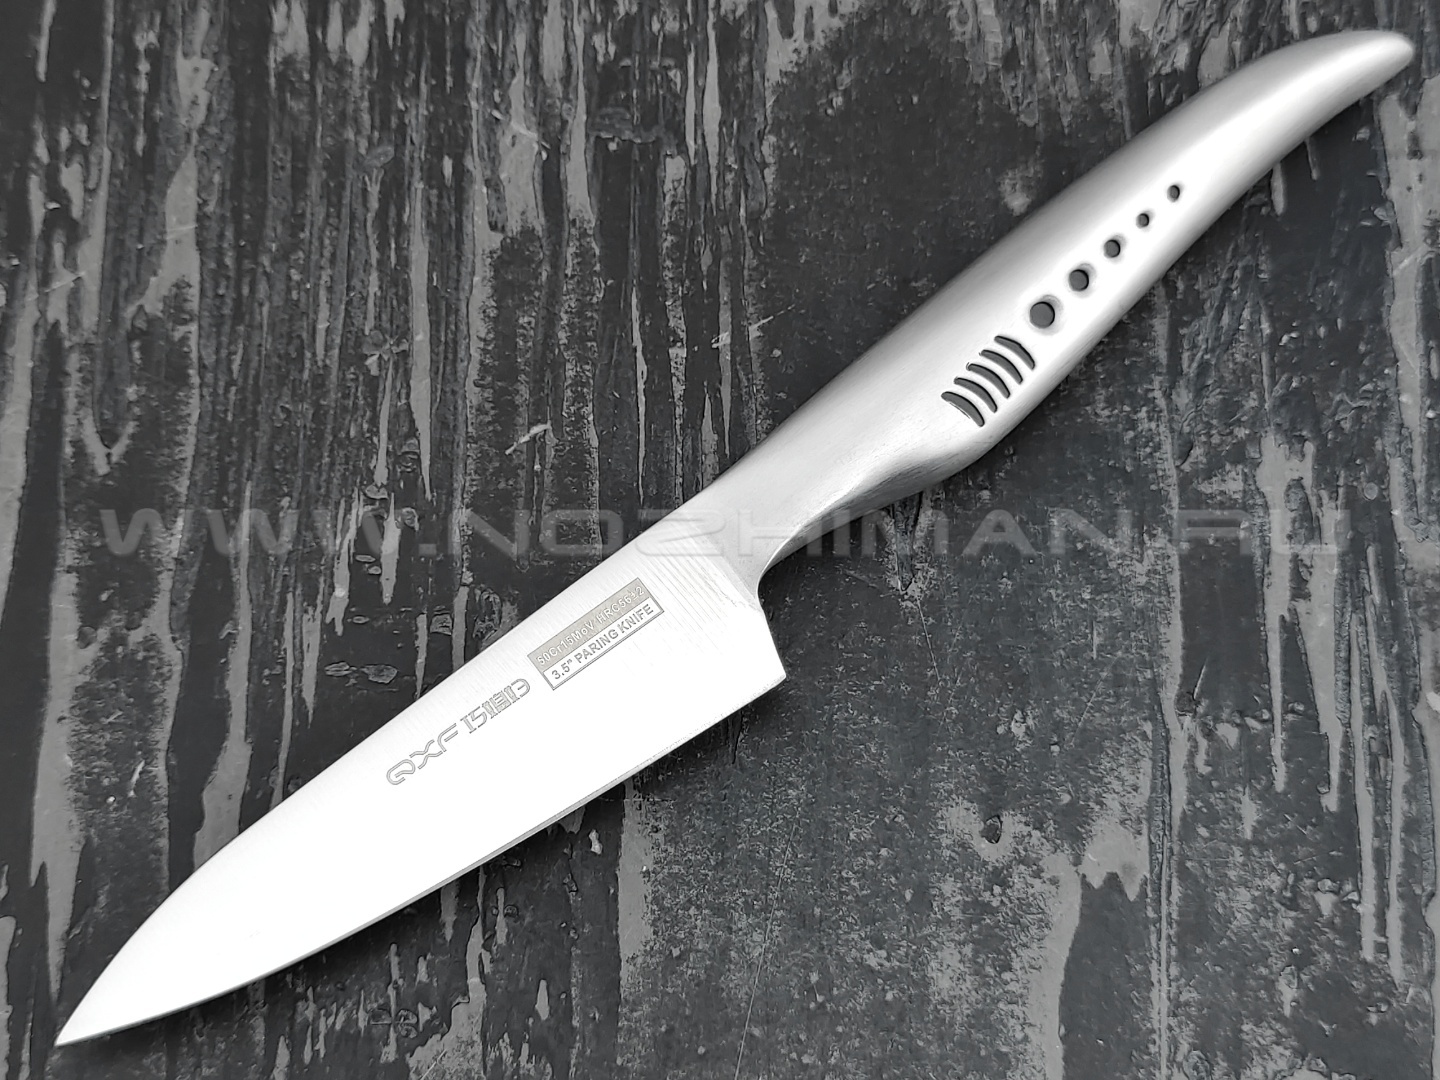 QXF Shark овощной нож R-5373 сталь 50Cr15MoV, рукоять сталь